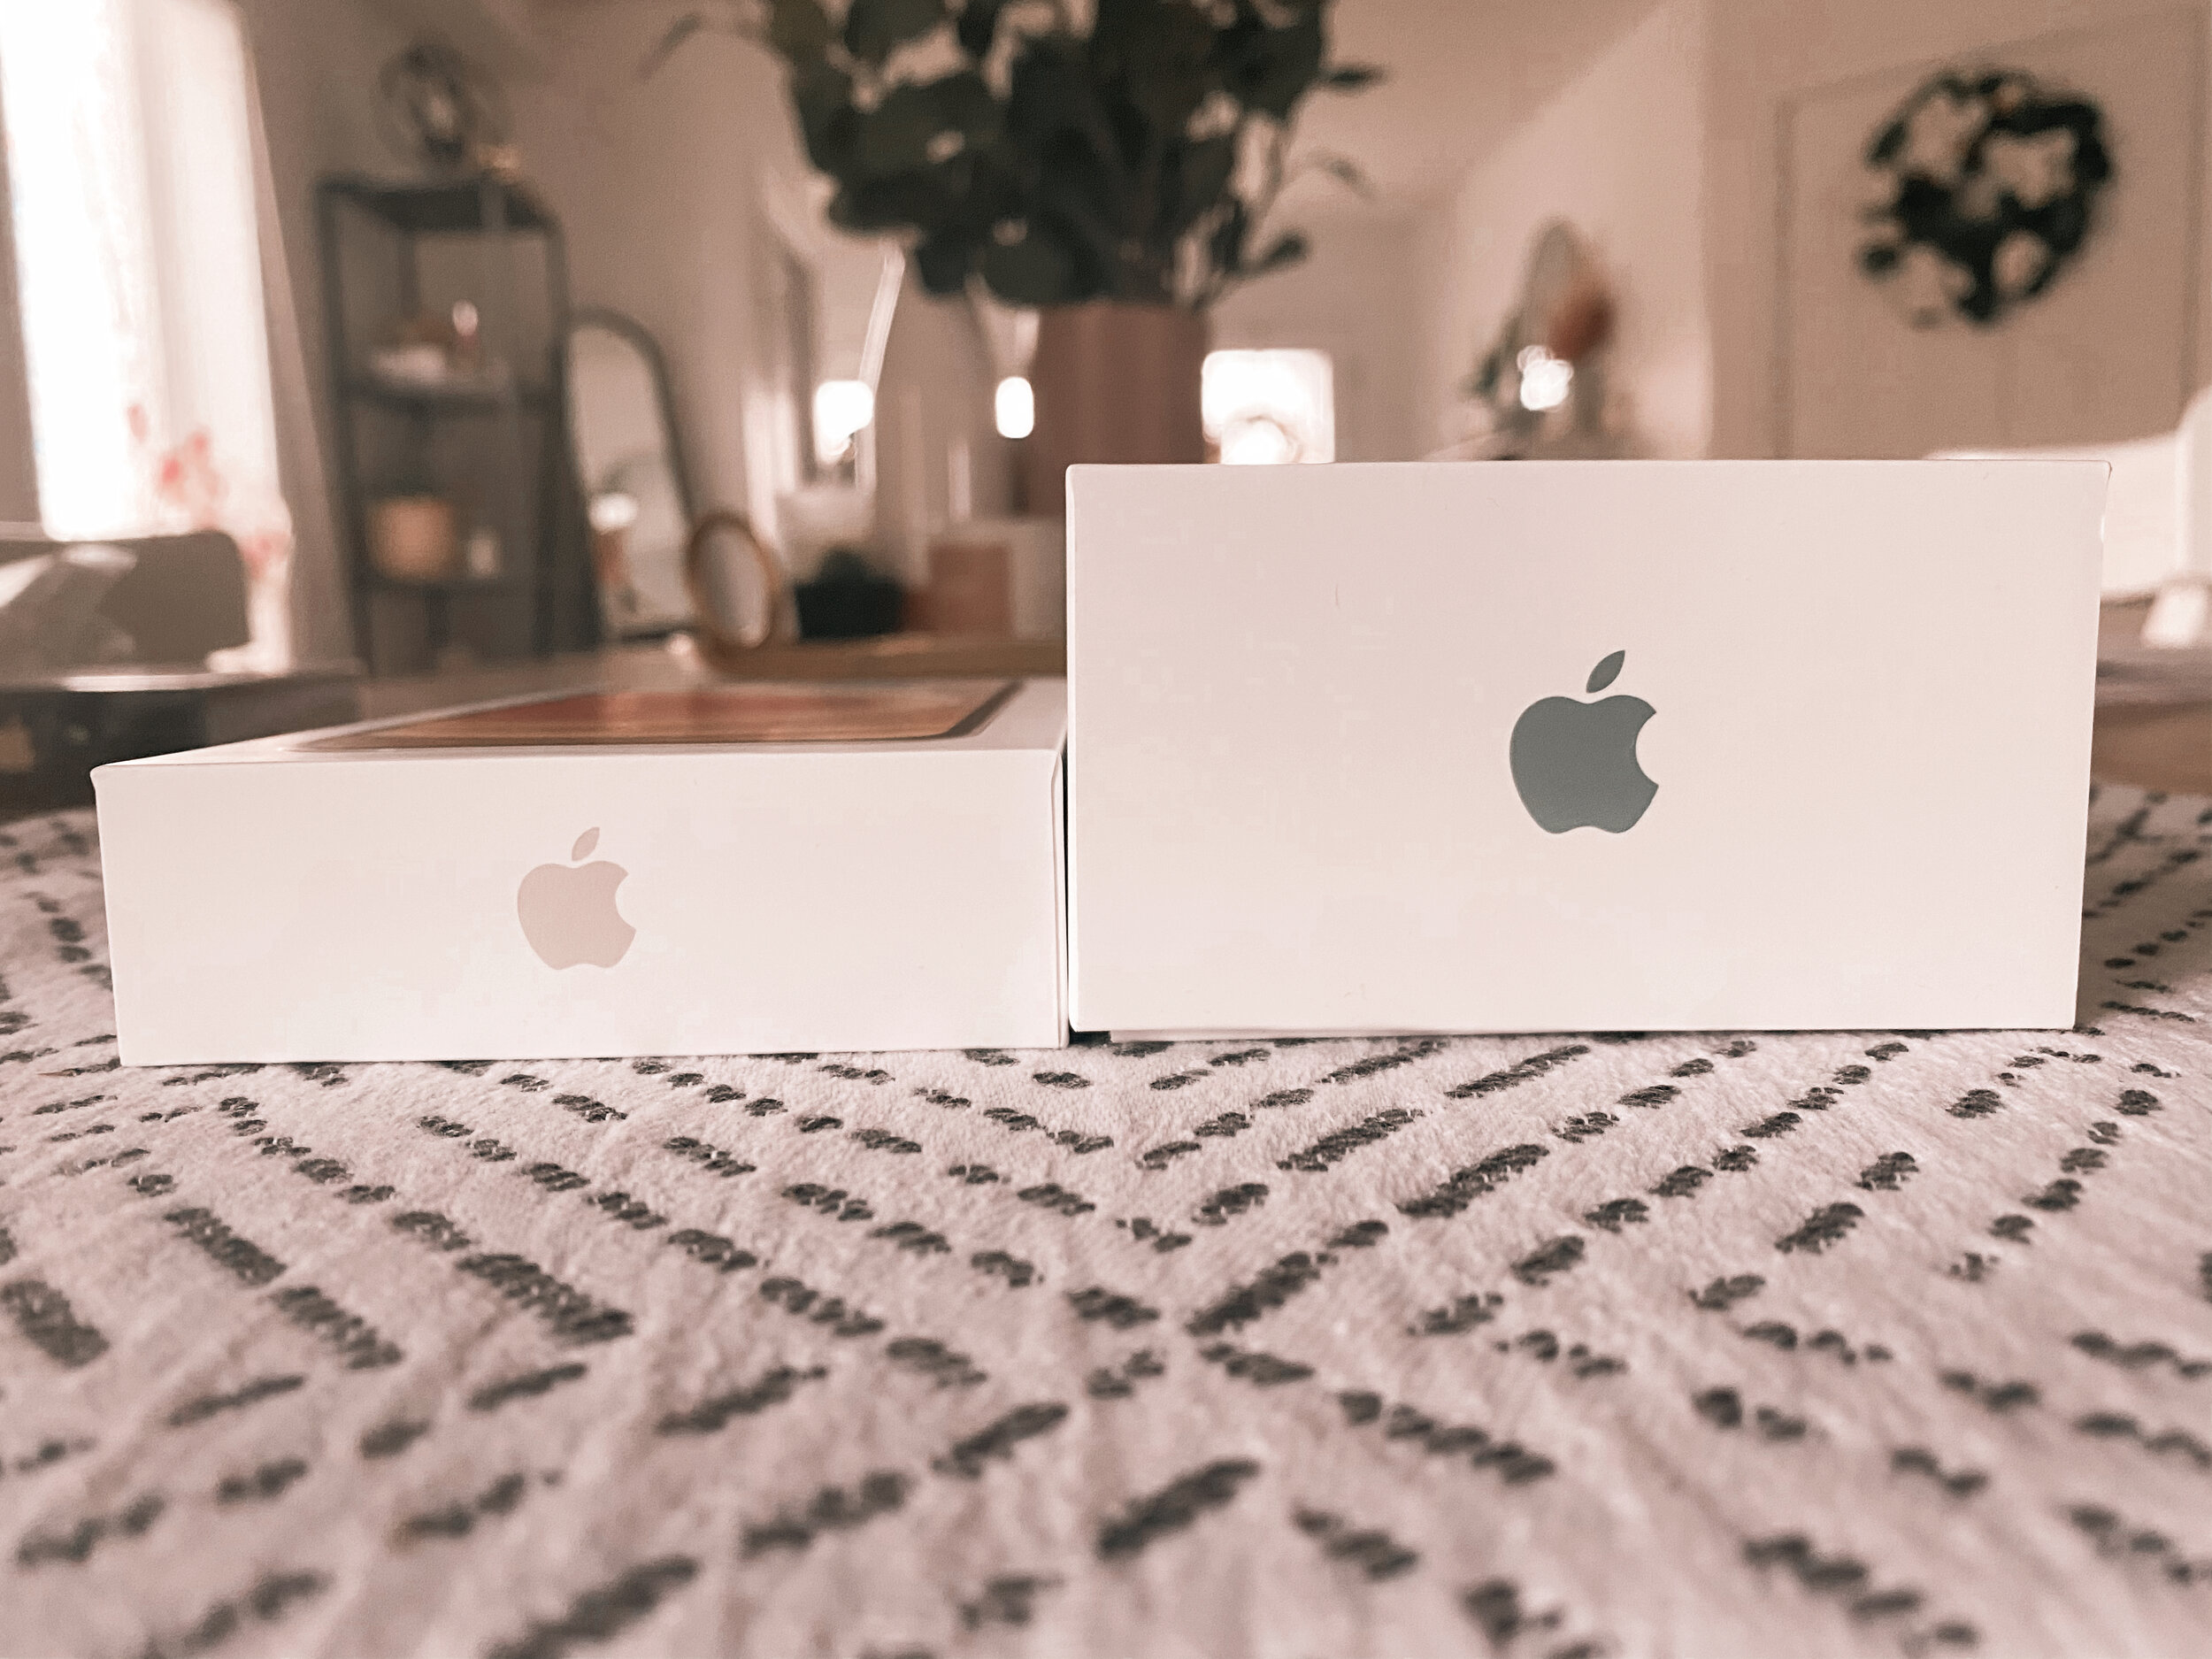 Left, iPhone 12 box. Right, iPhone 11 box